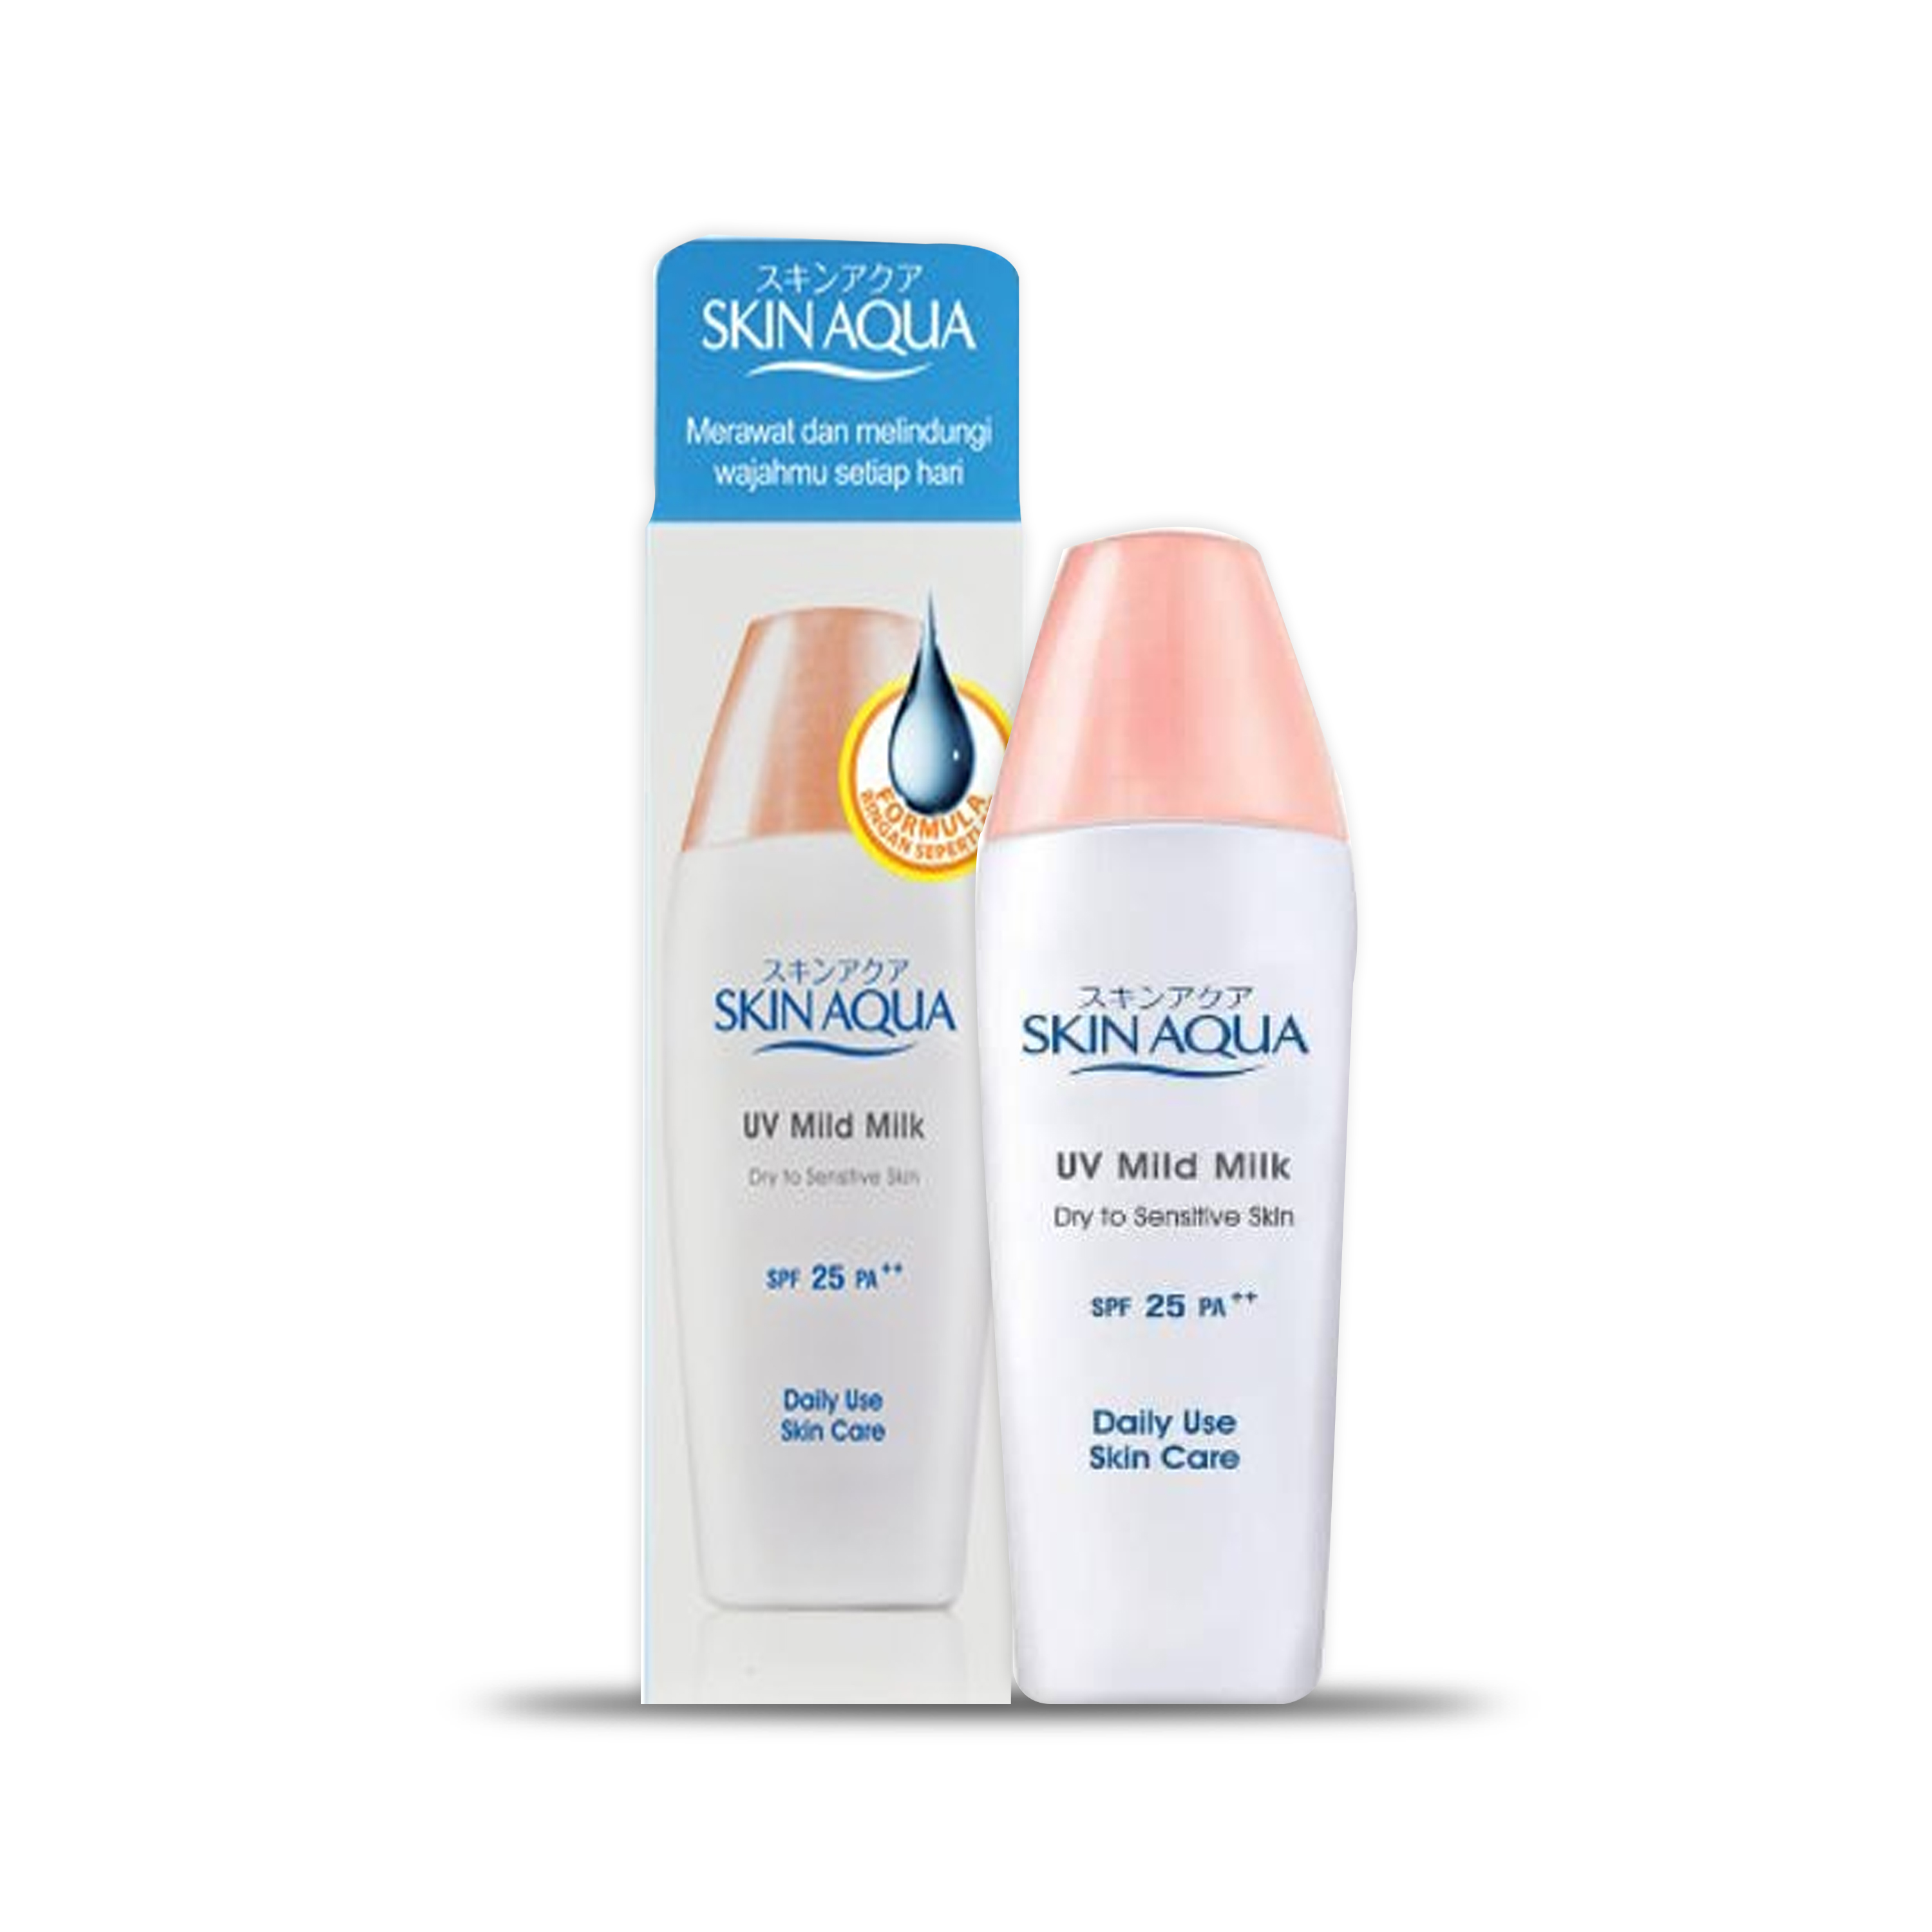 Skin Aqua UV Mild Milk SPF 25 PA++ 40 gr - Pelembab Kulit Kering Sensitif